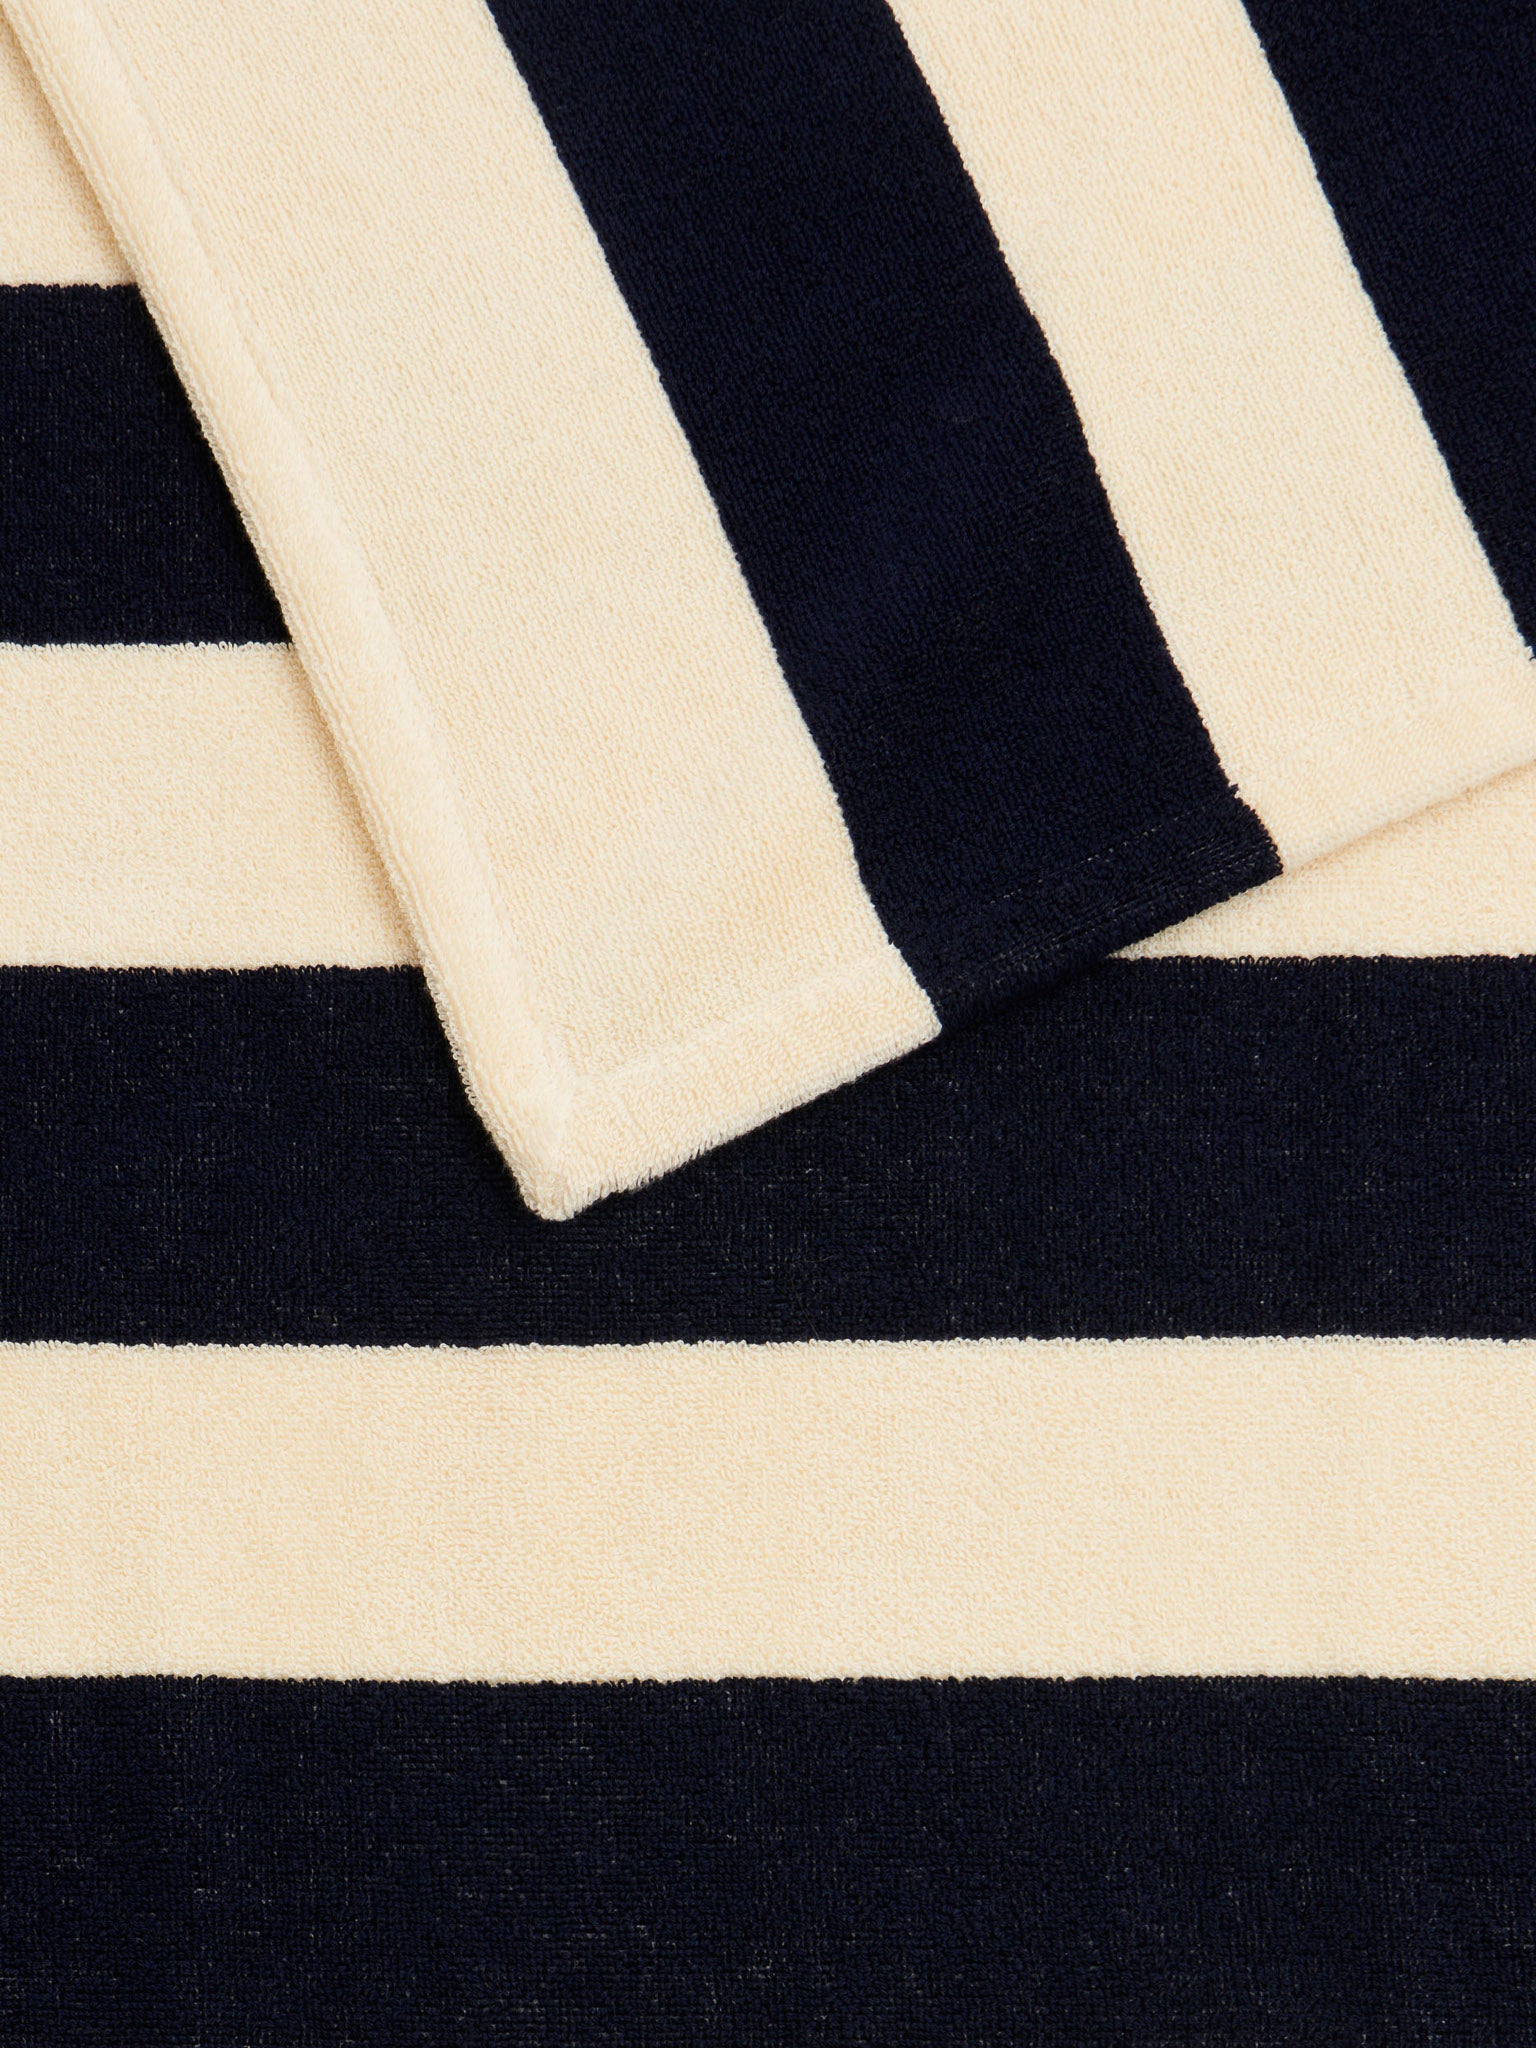 Beach Towel in Navy Stripes